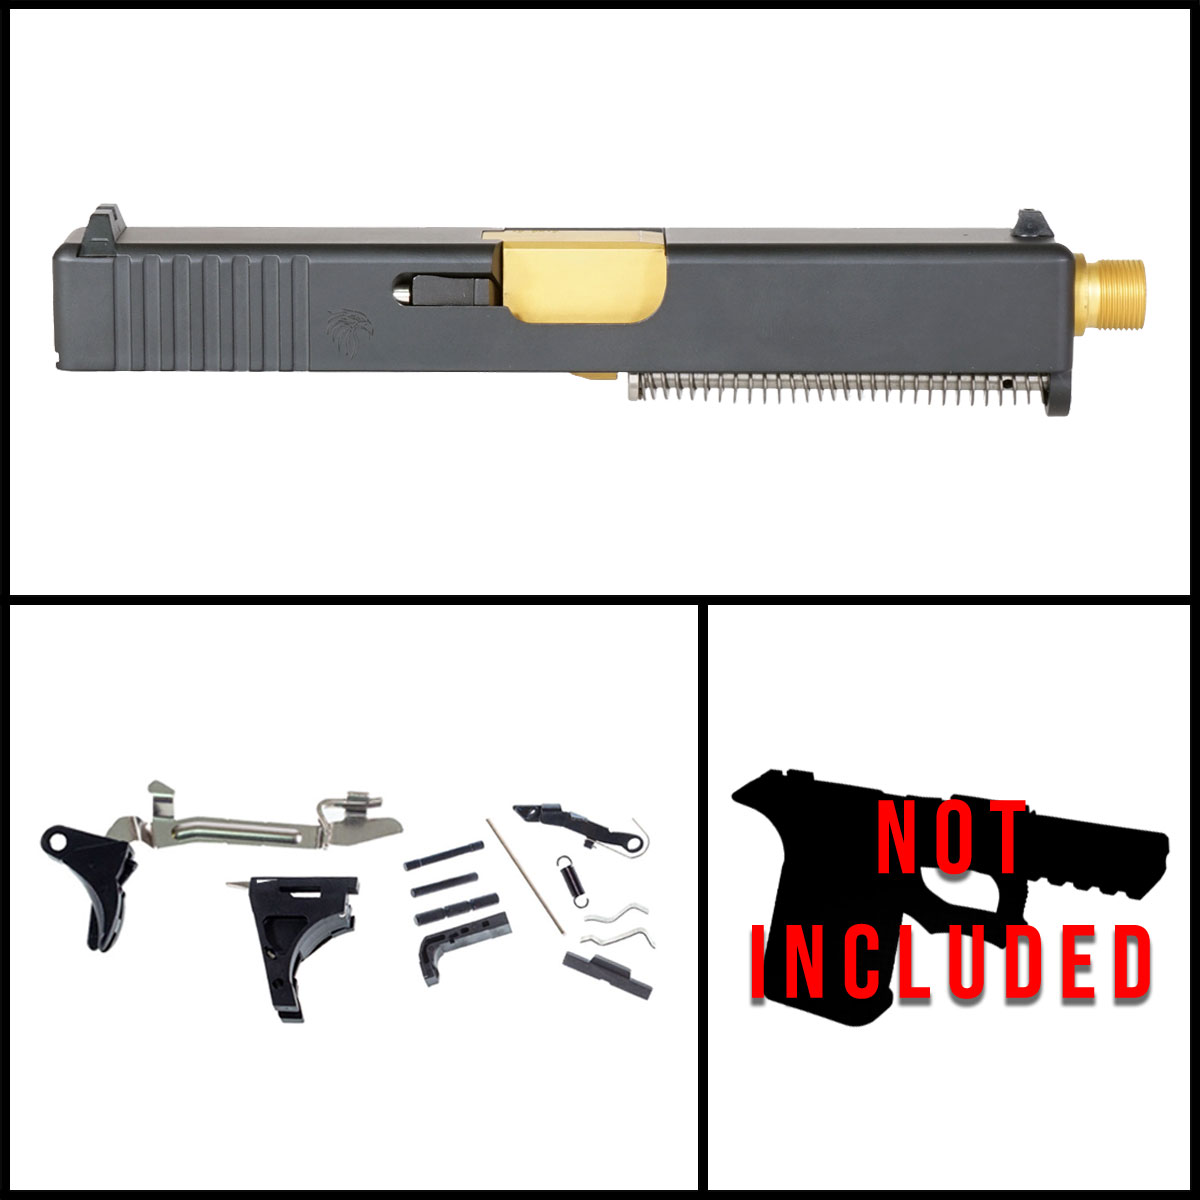 DTT 'Repunit Prime' 9mm Full Gun Kit - Glock 19 Gen 1-3 Compatible